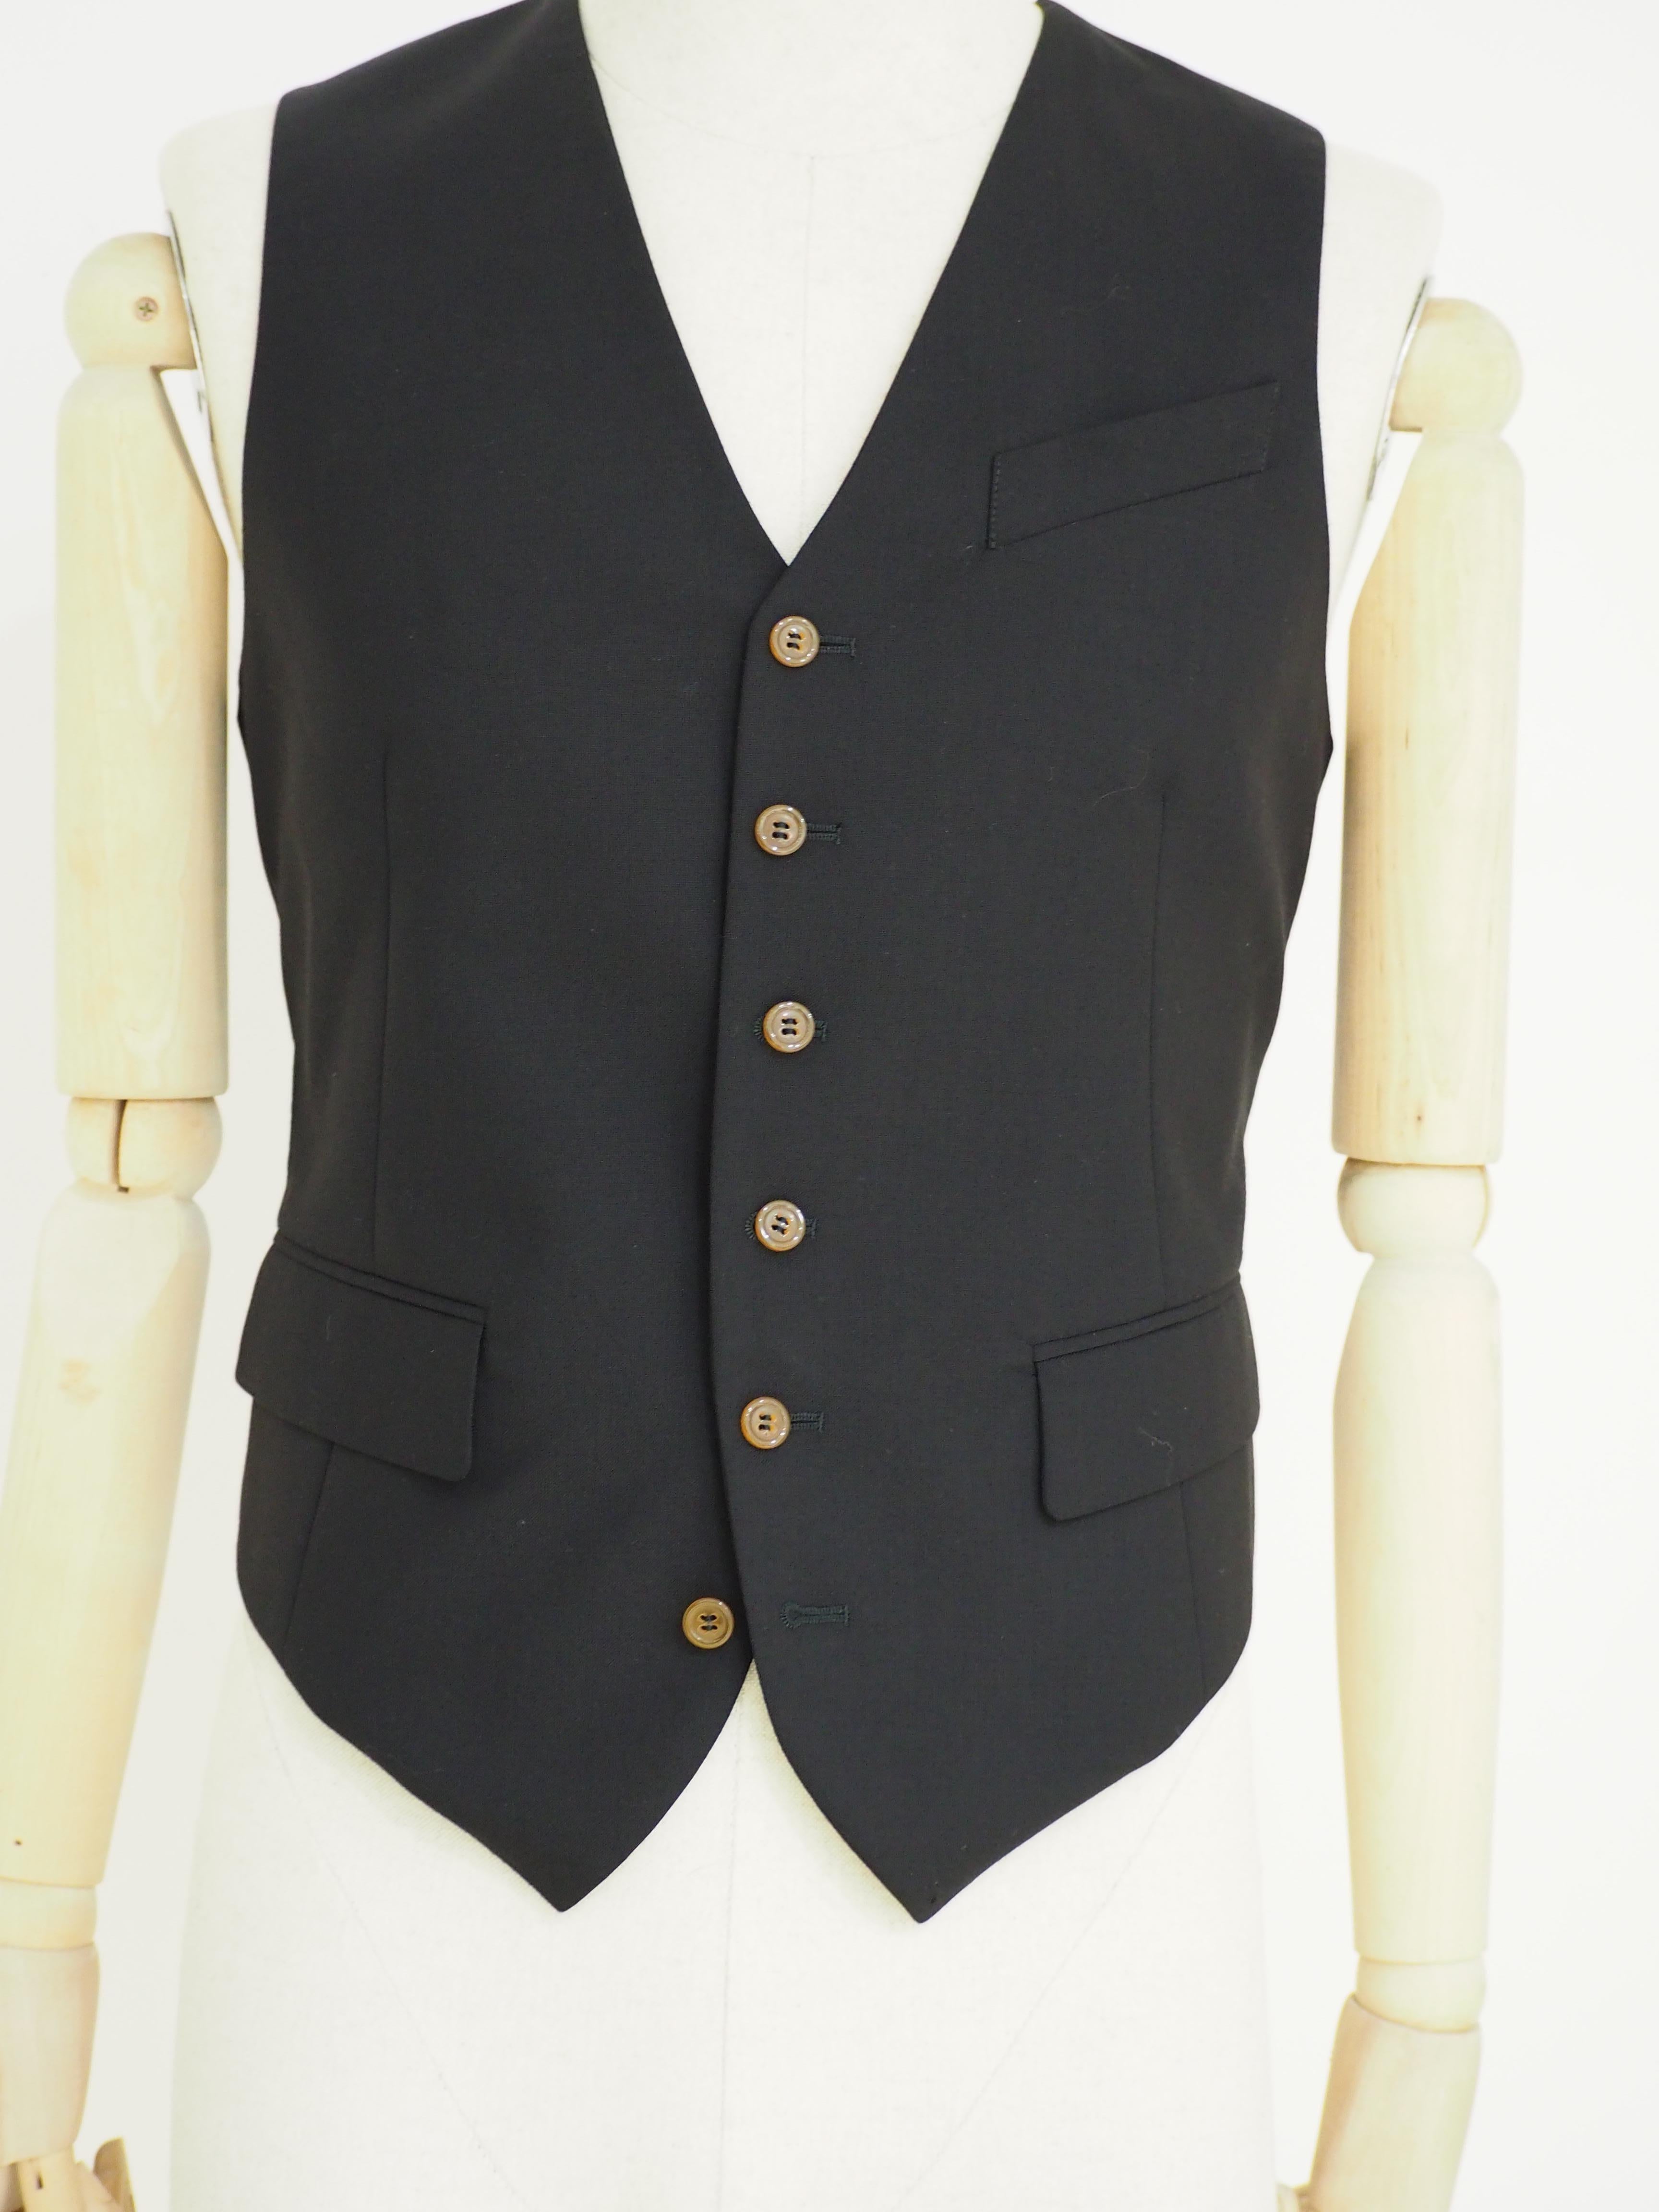 Vivienne Westwood black wool vest
size 48